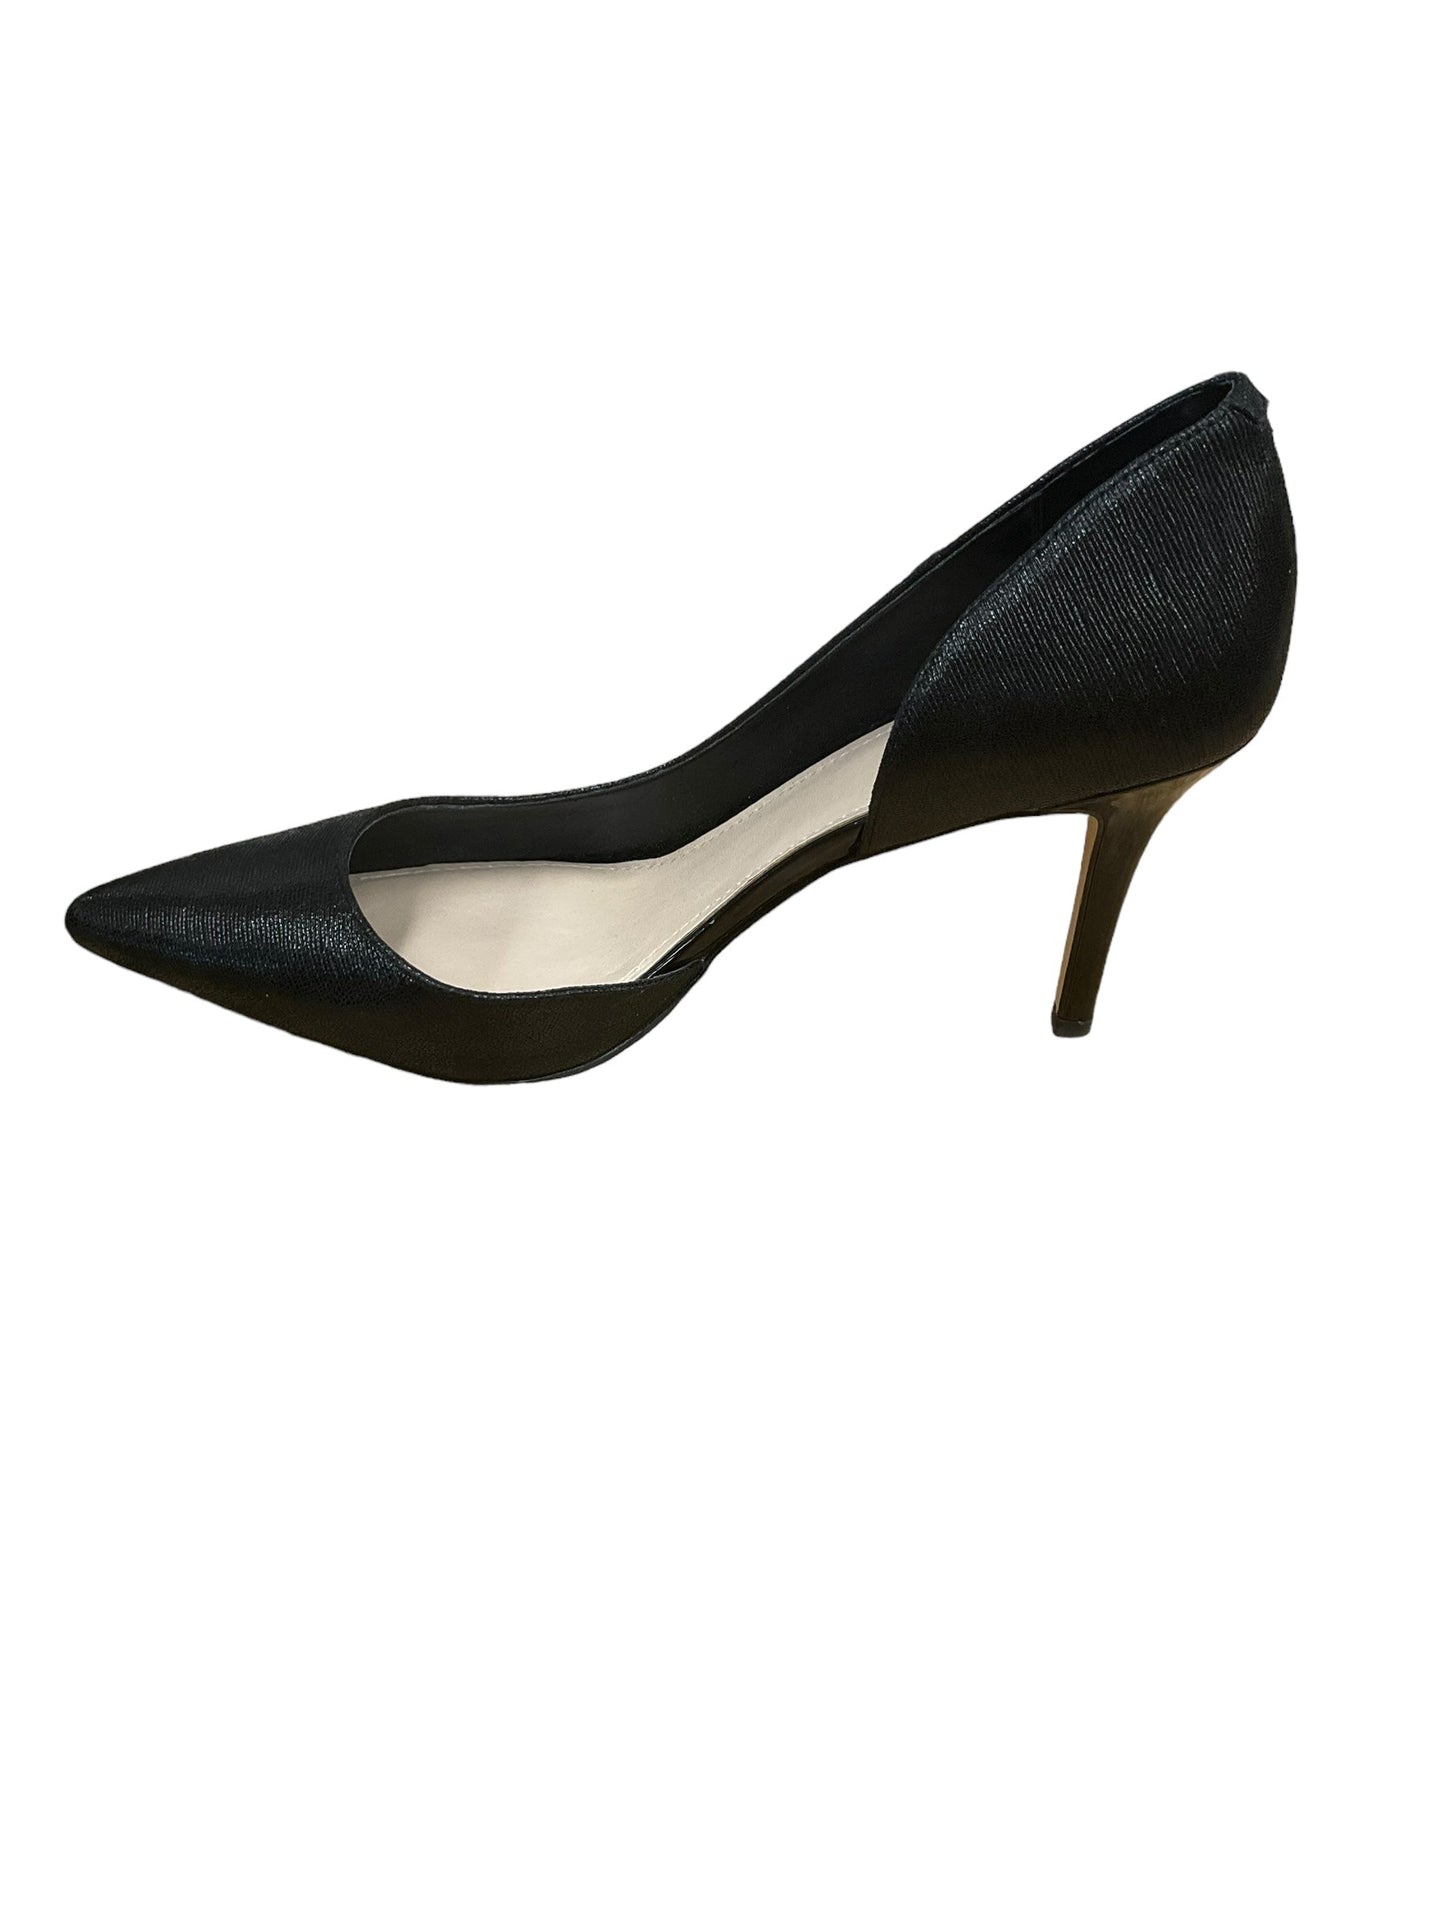 Black Shoes Heels Stiletto White House Black Market, Size 8